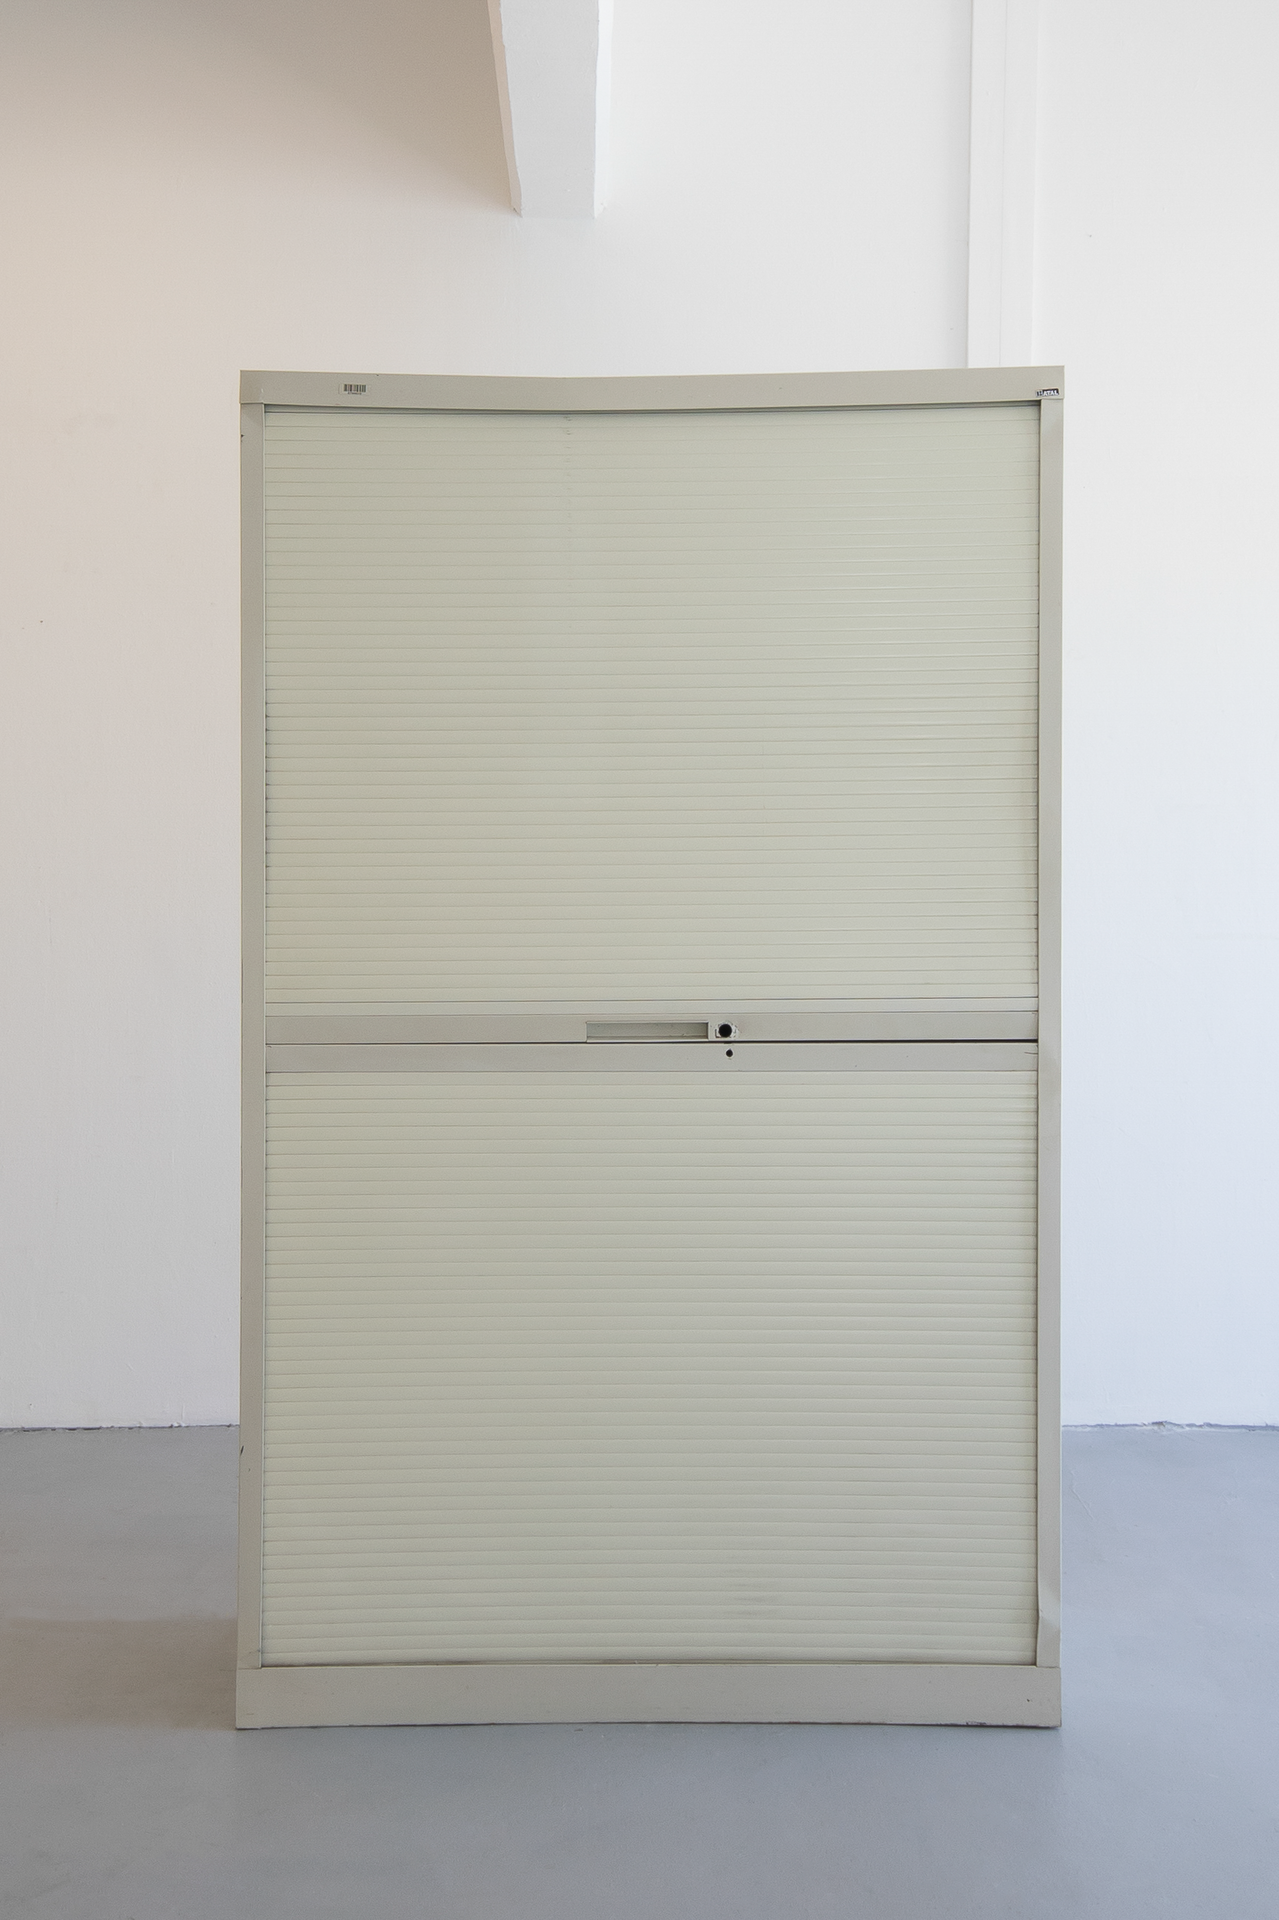 Hugo Bausch Belbachir, Untitled (Cabinet), Metal cabinet, 200 x 121 x 46 cm, 78 3/4 x 47 5/8 x 18 1/8 inches.